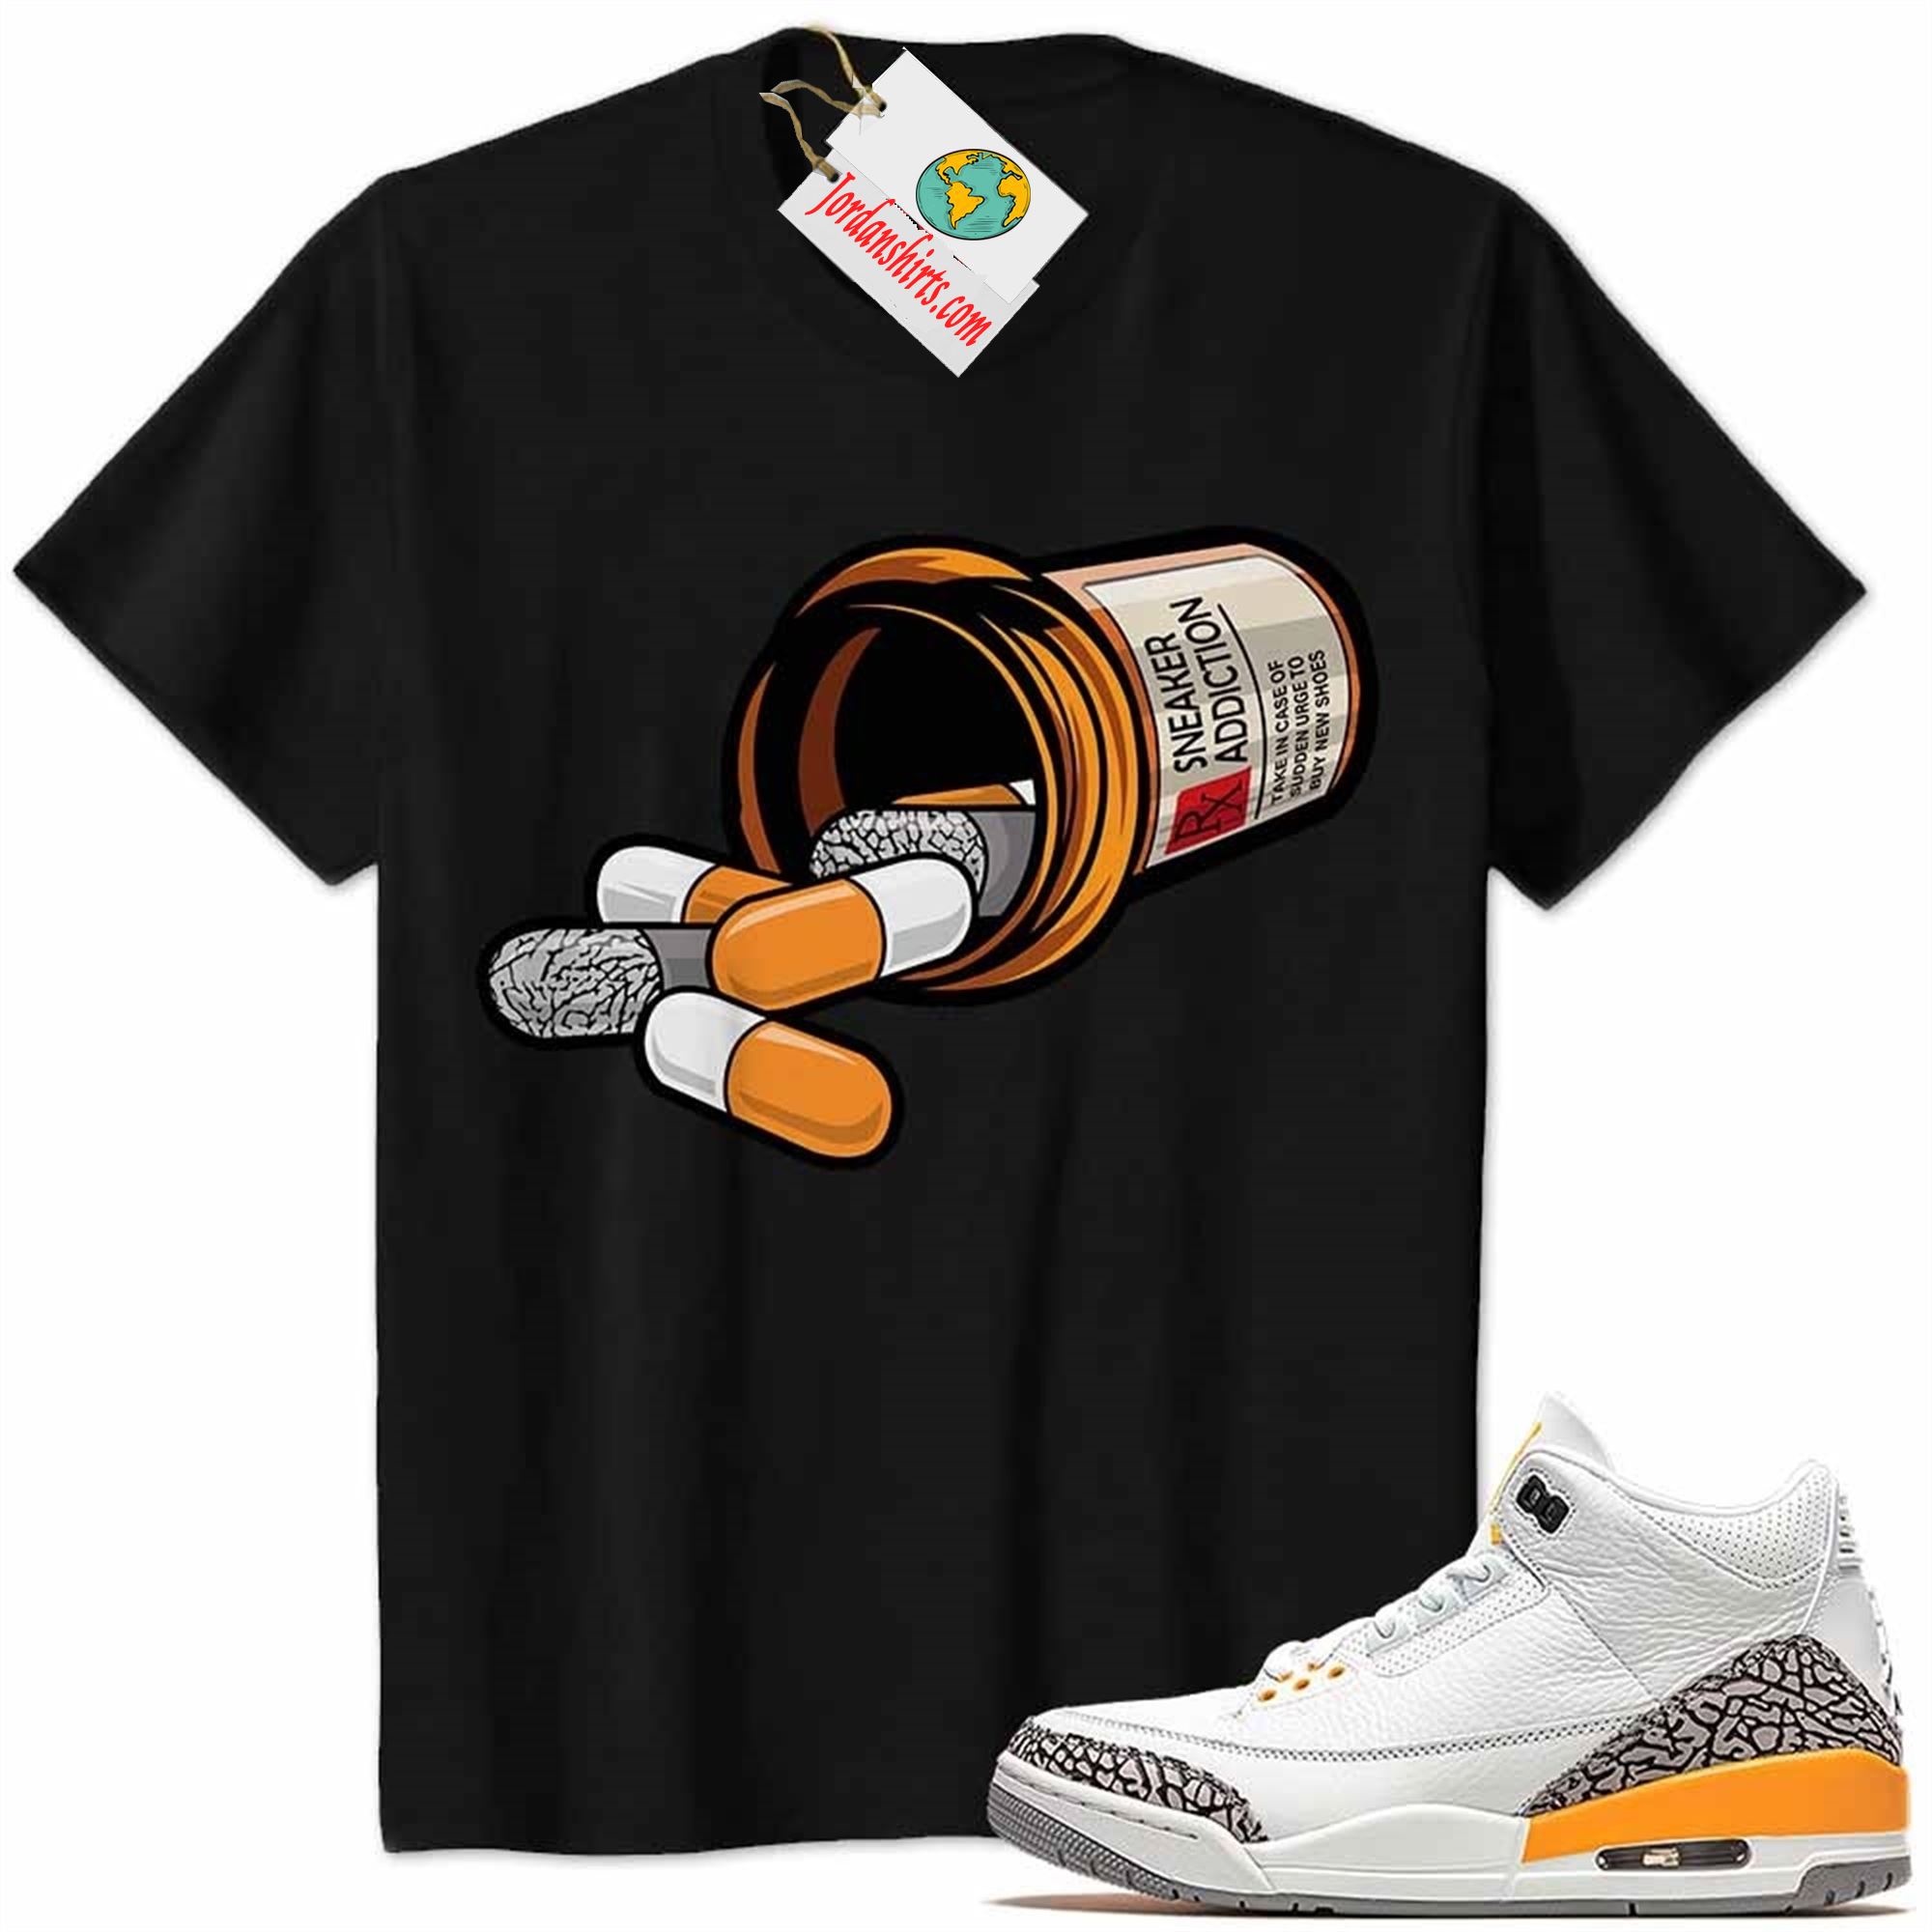 Jordan 3 Shirt, Rx Drugs Pill Bottle Sneaker Addiction Black Air Jordan 3 Laser Orange 3s Plus Size Up To 5xl